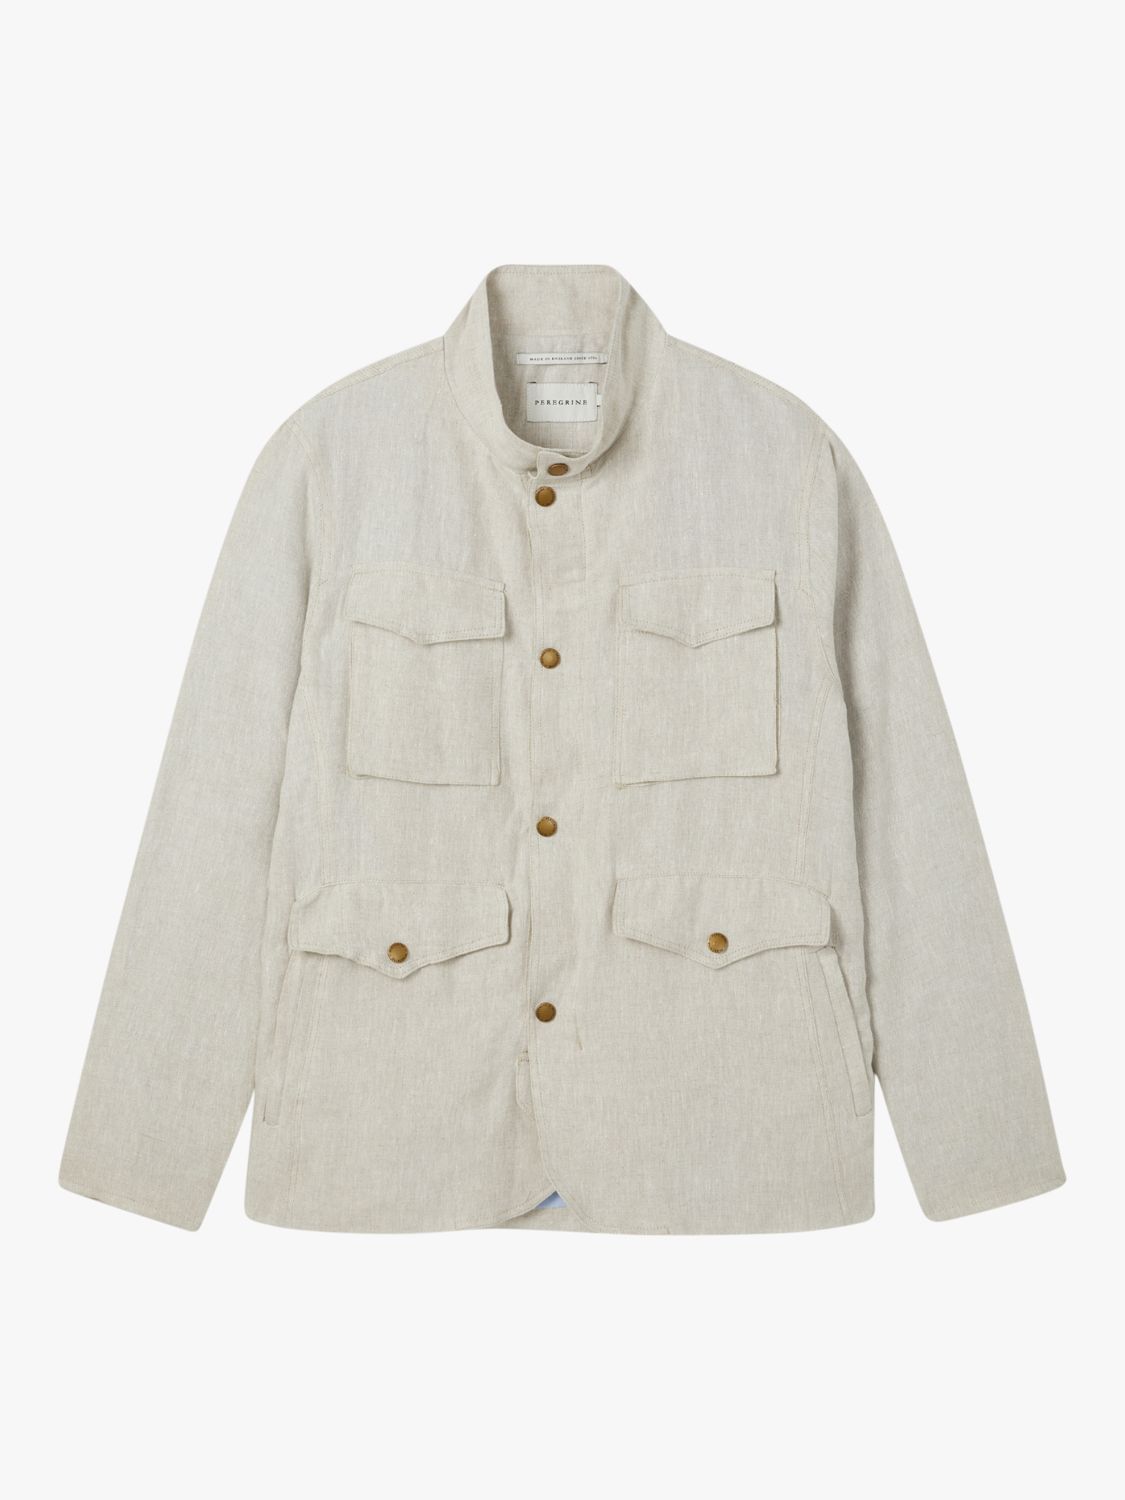 Buy Peregrine Malvern Linen Jacket, Natural Online at johnlewis.com